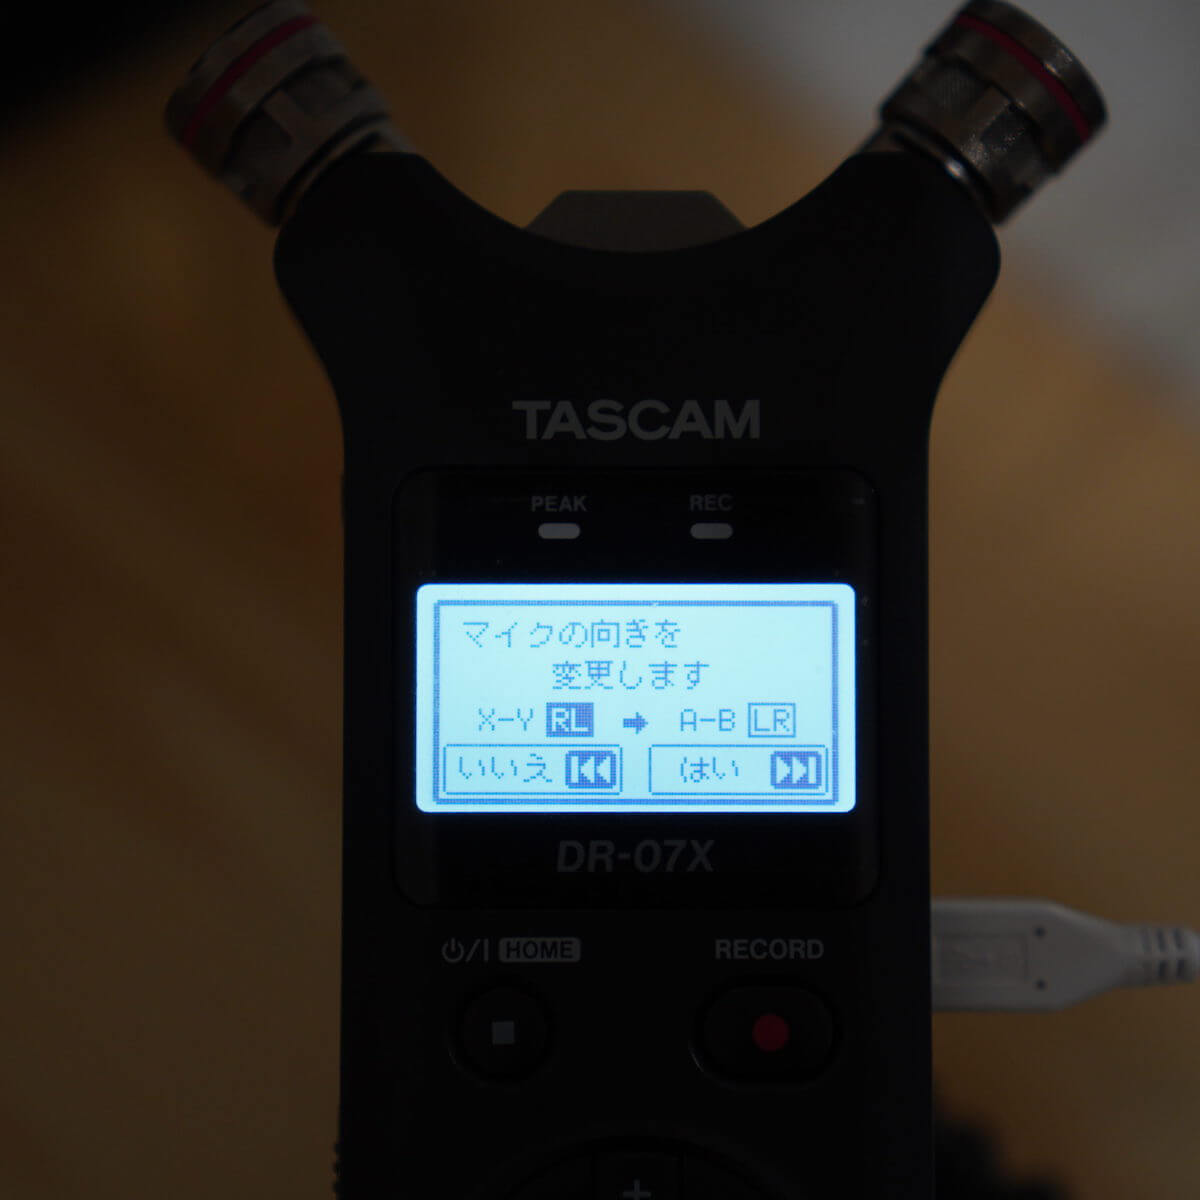 TASCAMのDR-07X